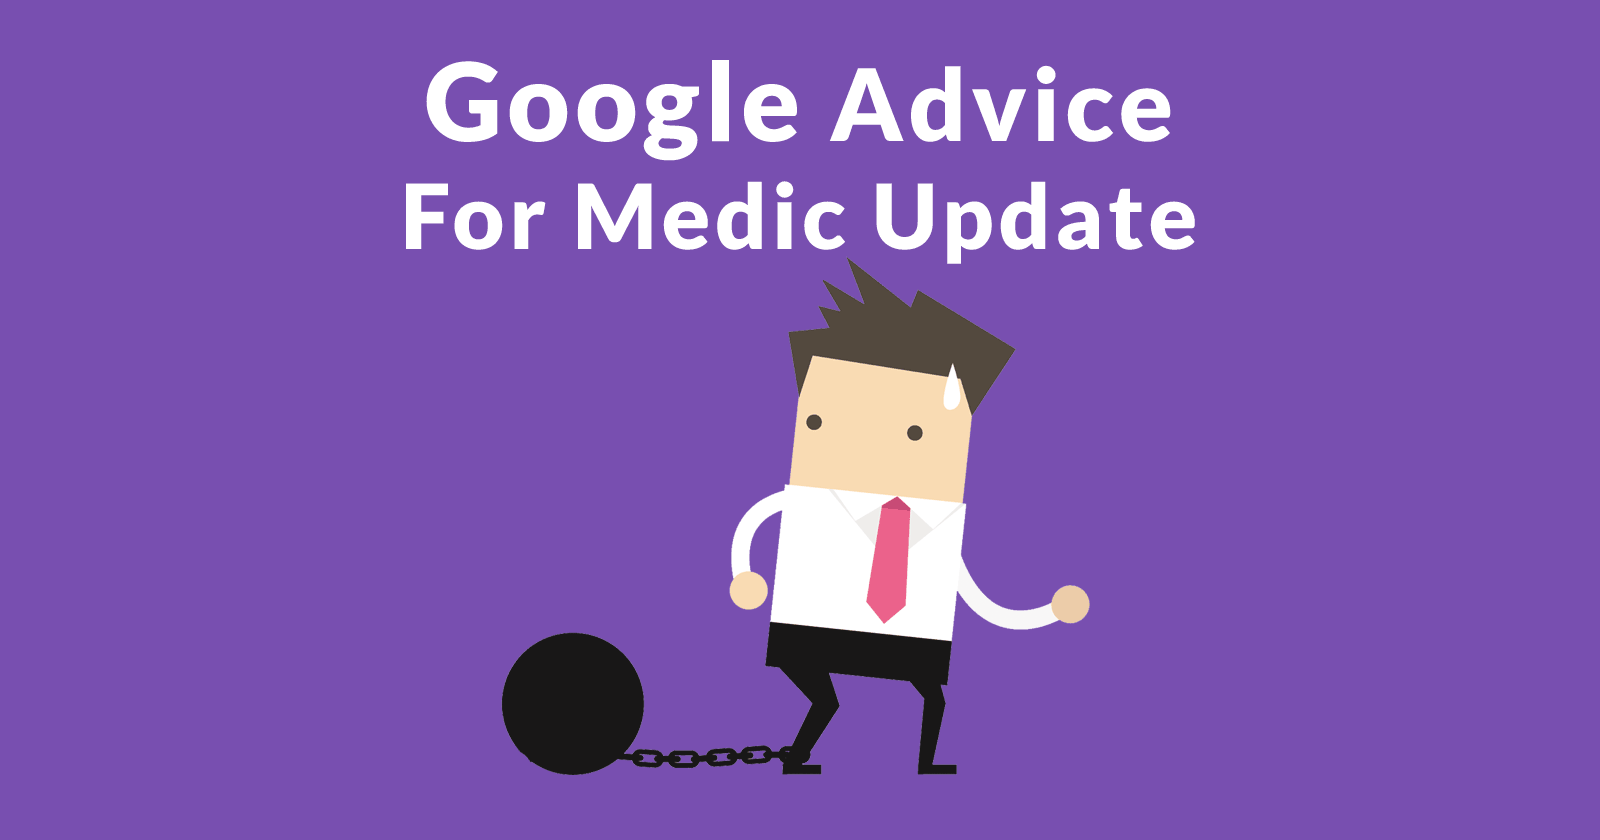 Google Advice for Medic Update